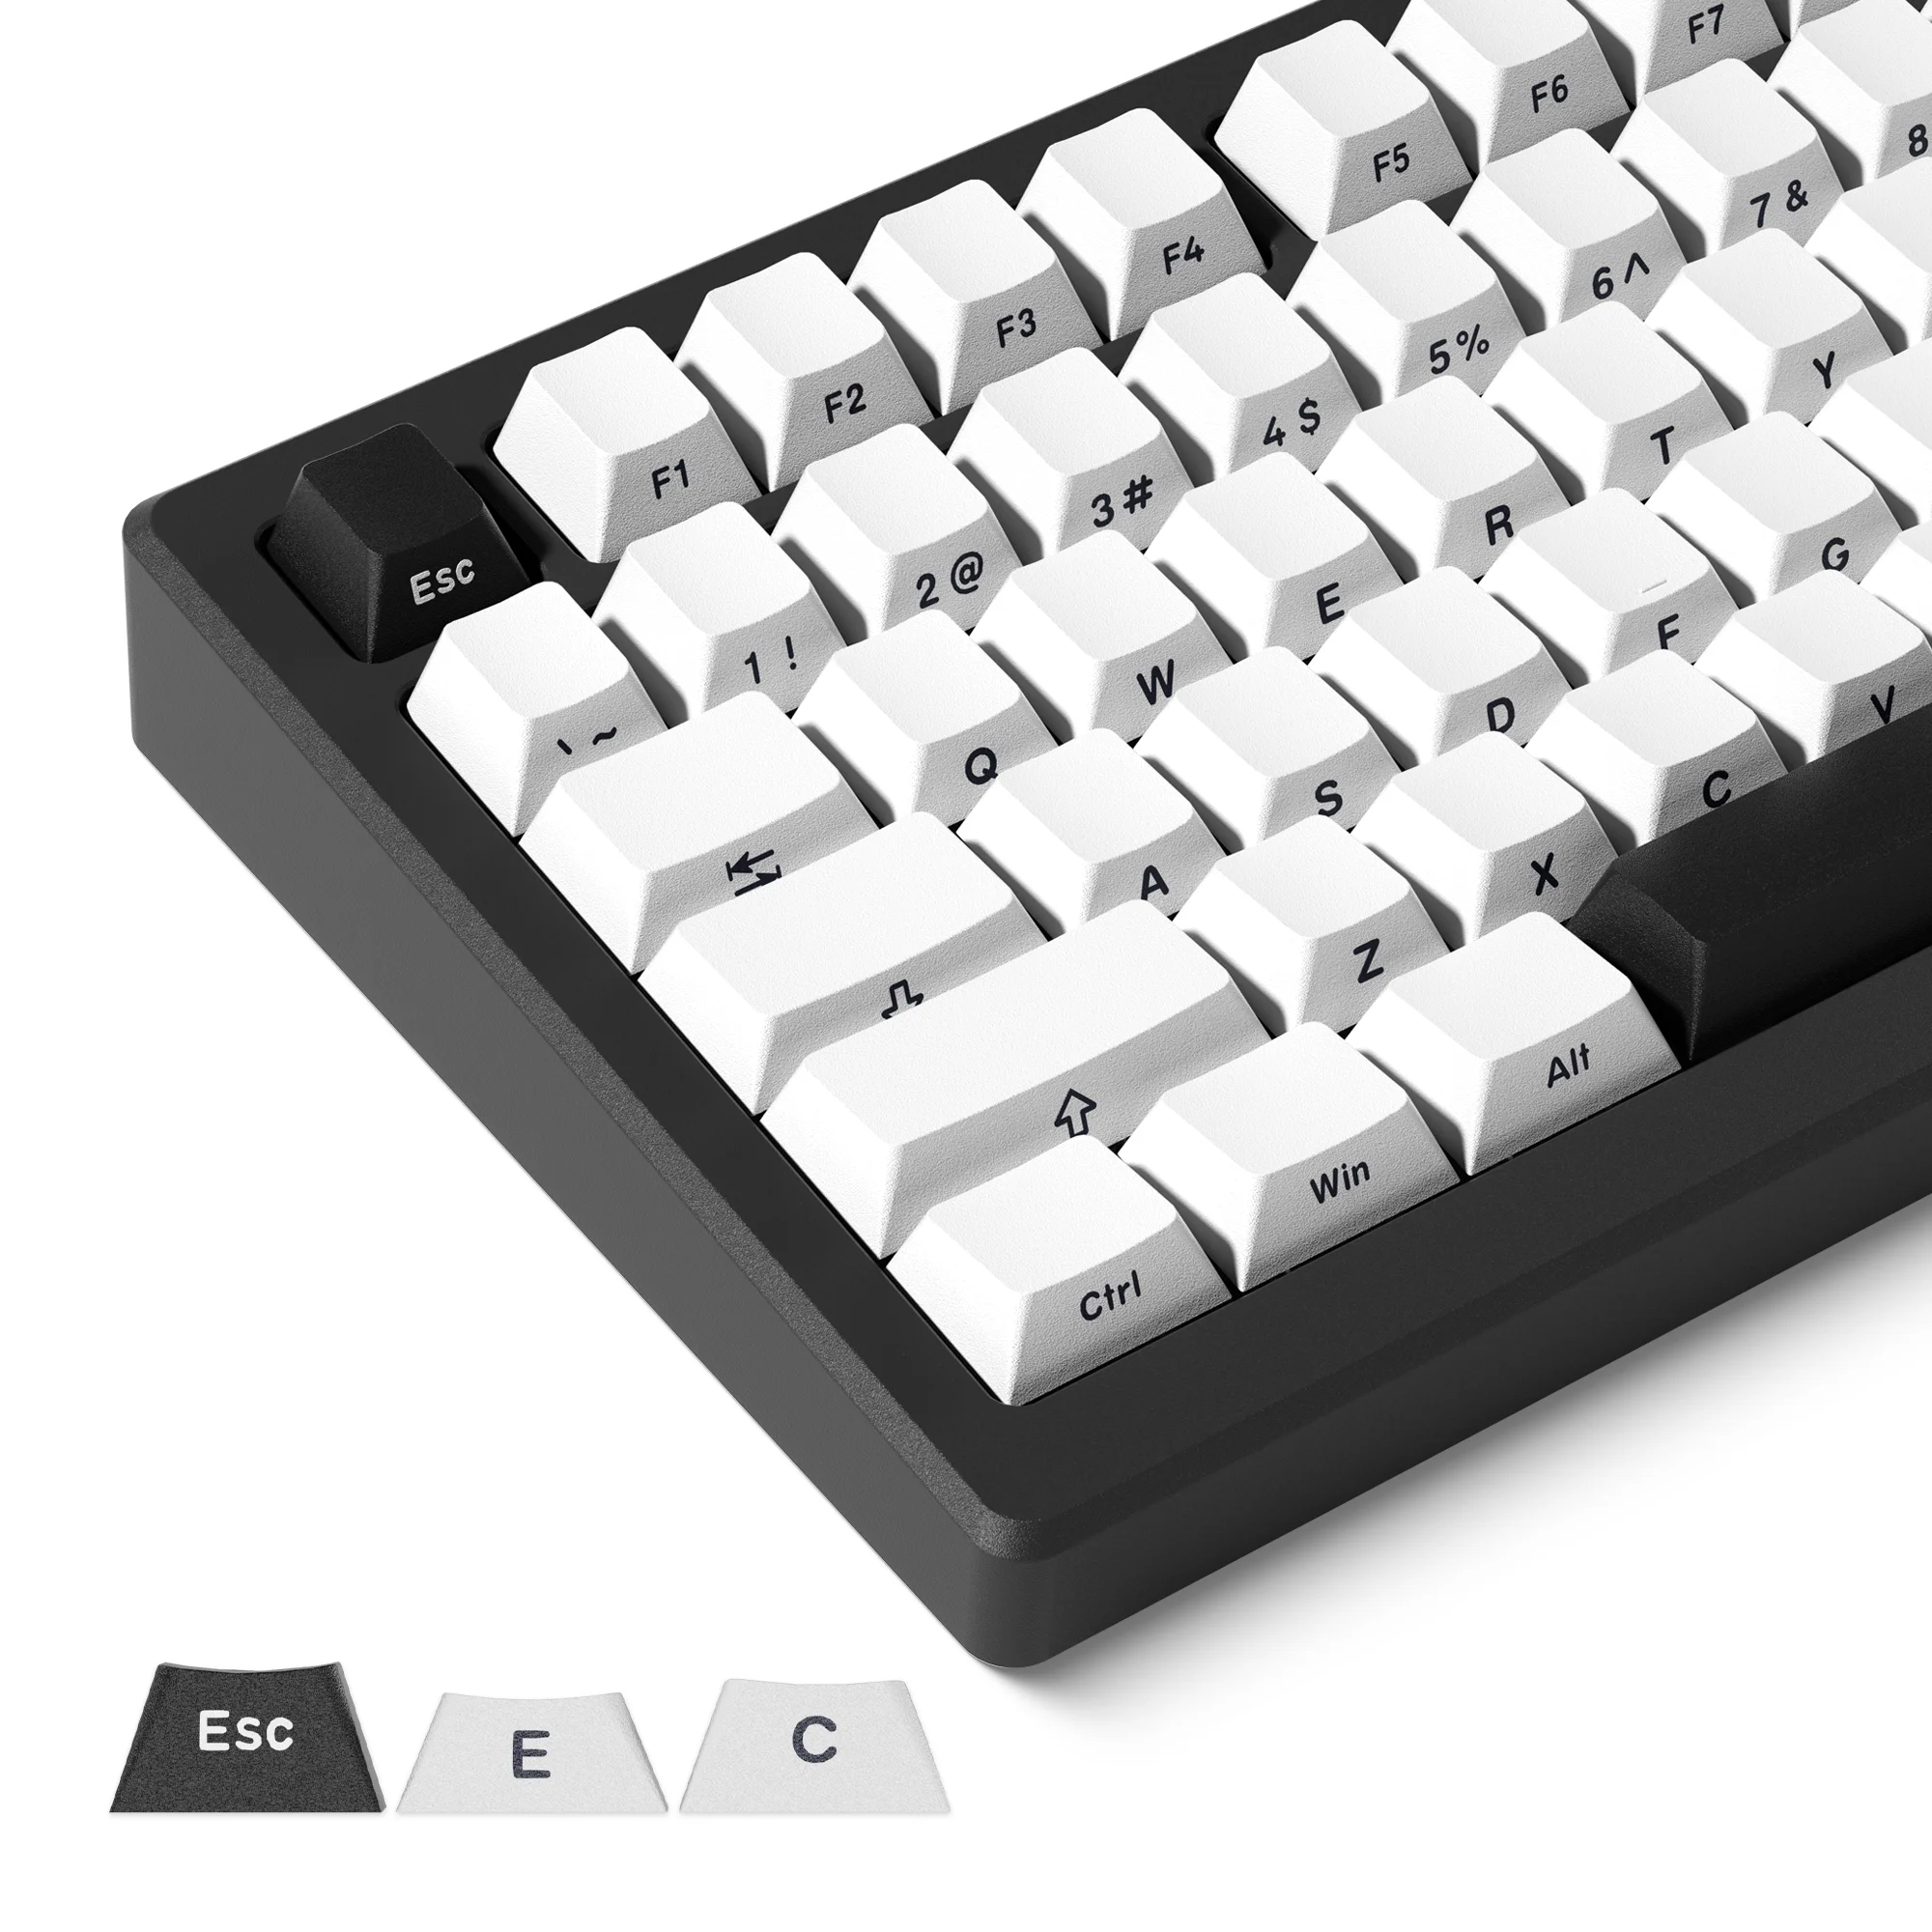 

XVX 132 Keys Double Shot Side Print White/Black Keycaps Cherry Profile PBT Key Cap Set for Mechanical Keyboard Gaming Keycaps